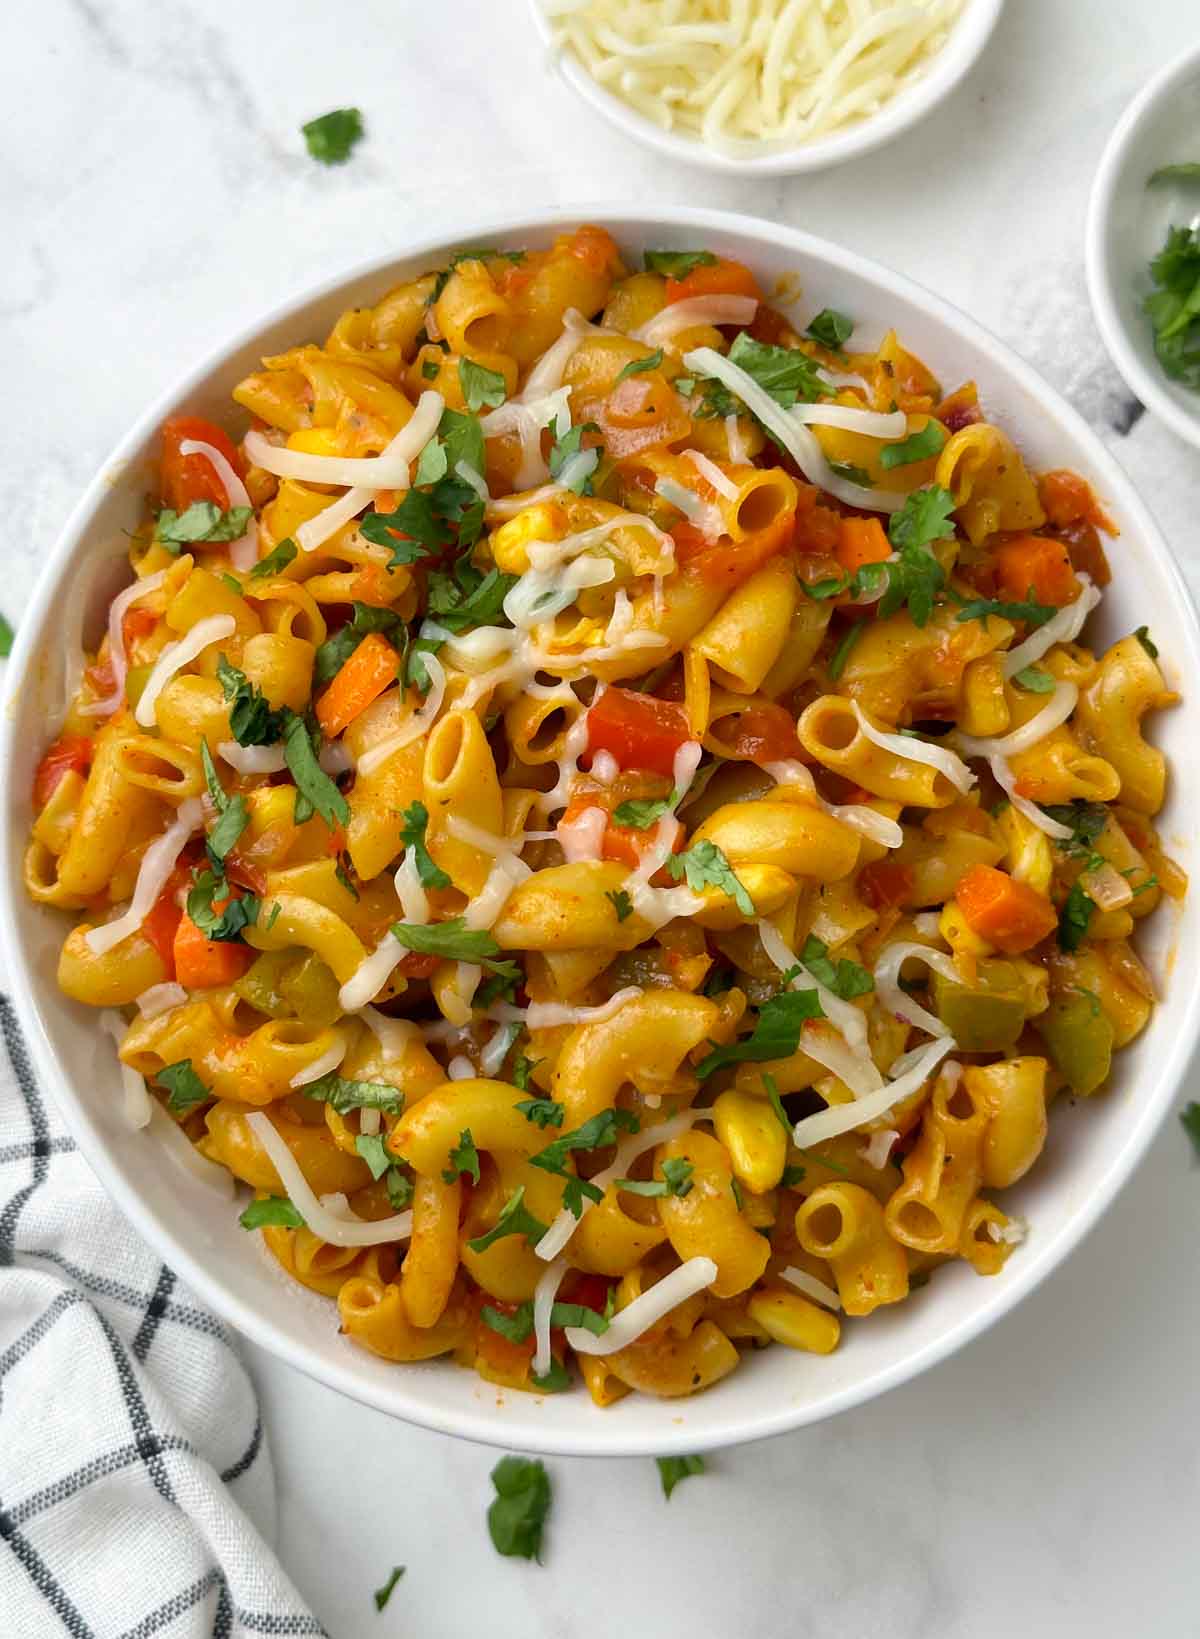 Stovetop Italian Macaroni Recipe: How to Make It